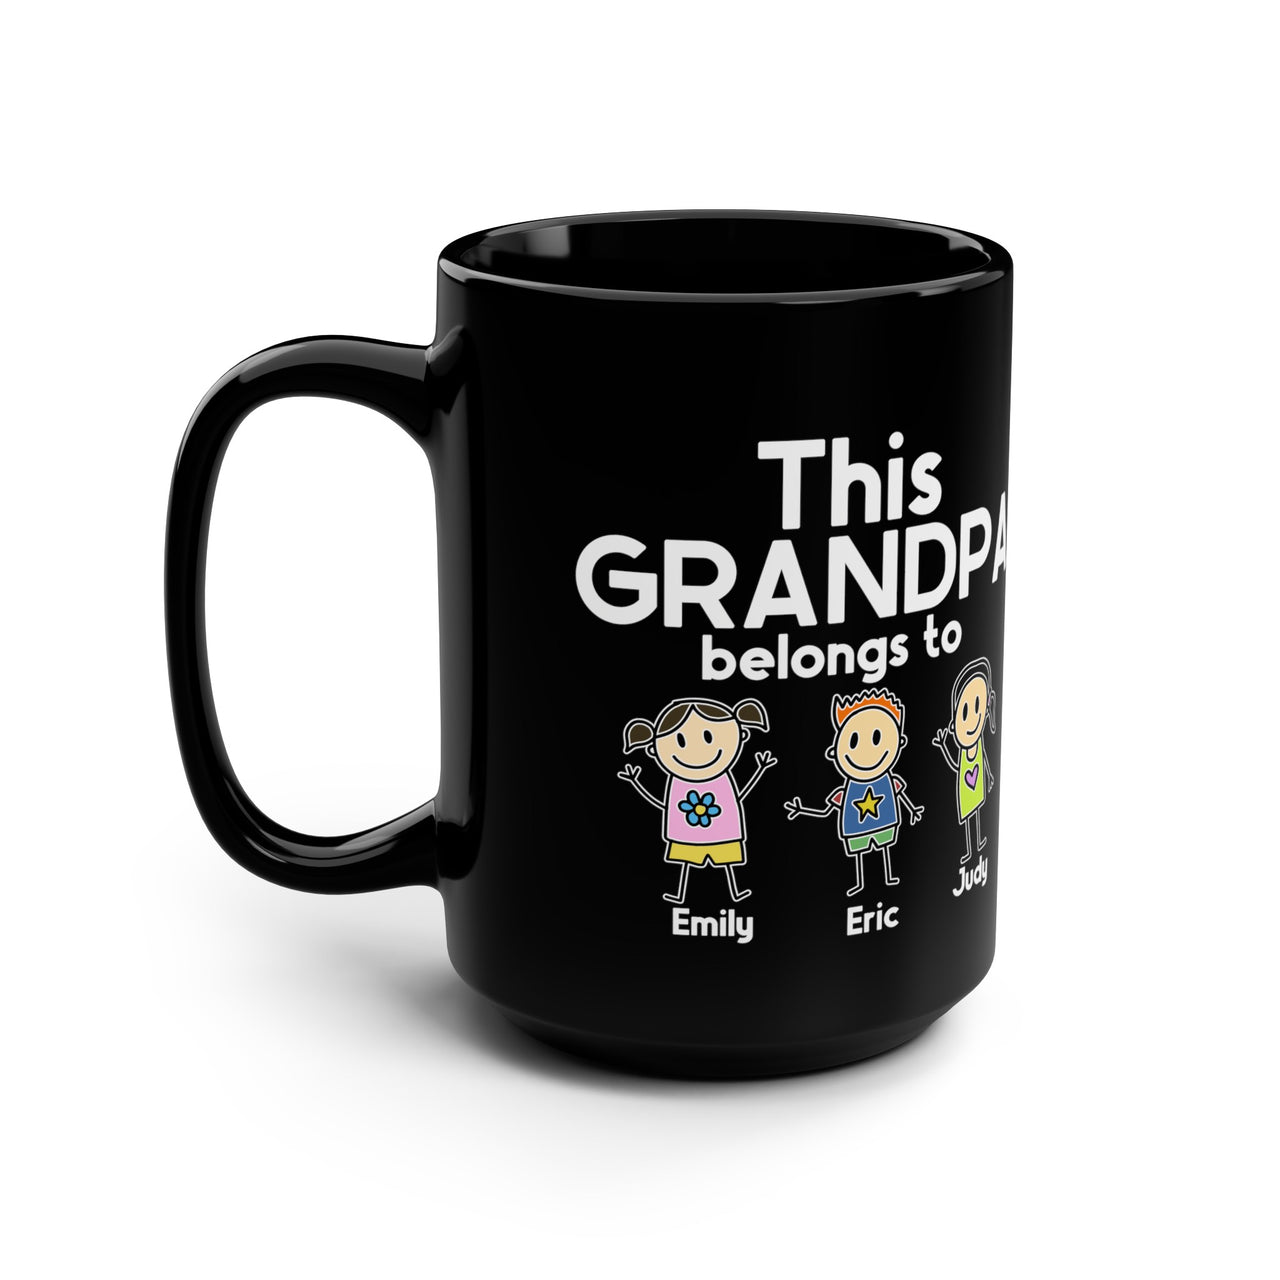 This Grandpa belongs to Personalized Mug